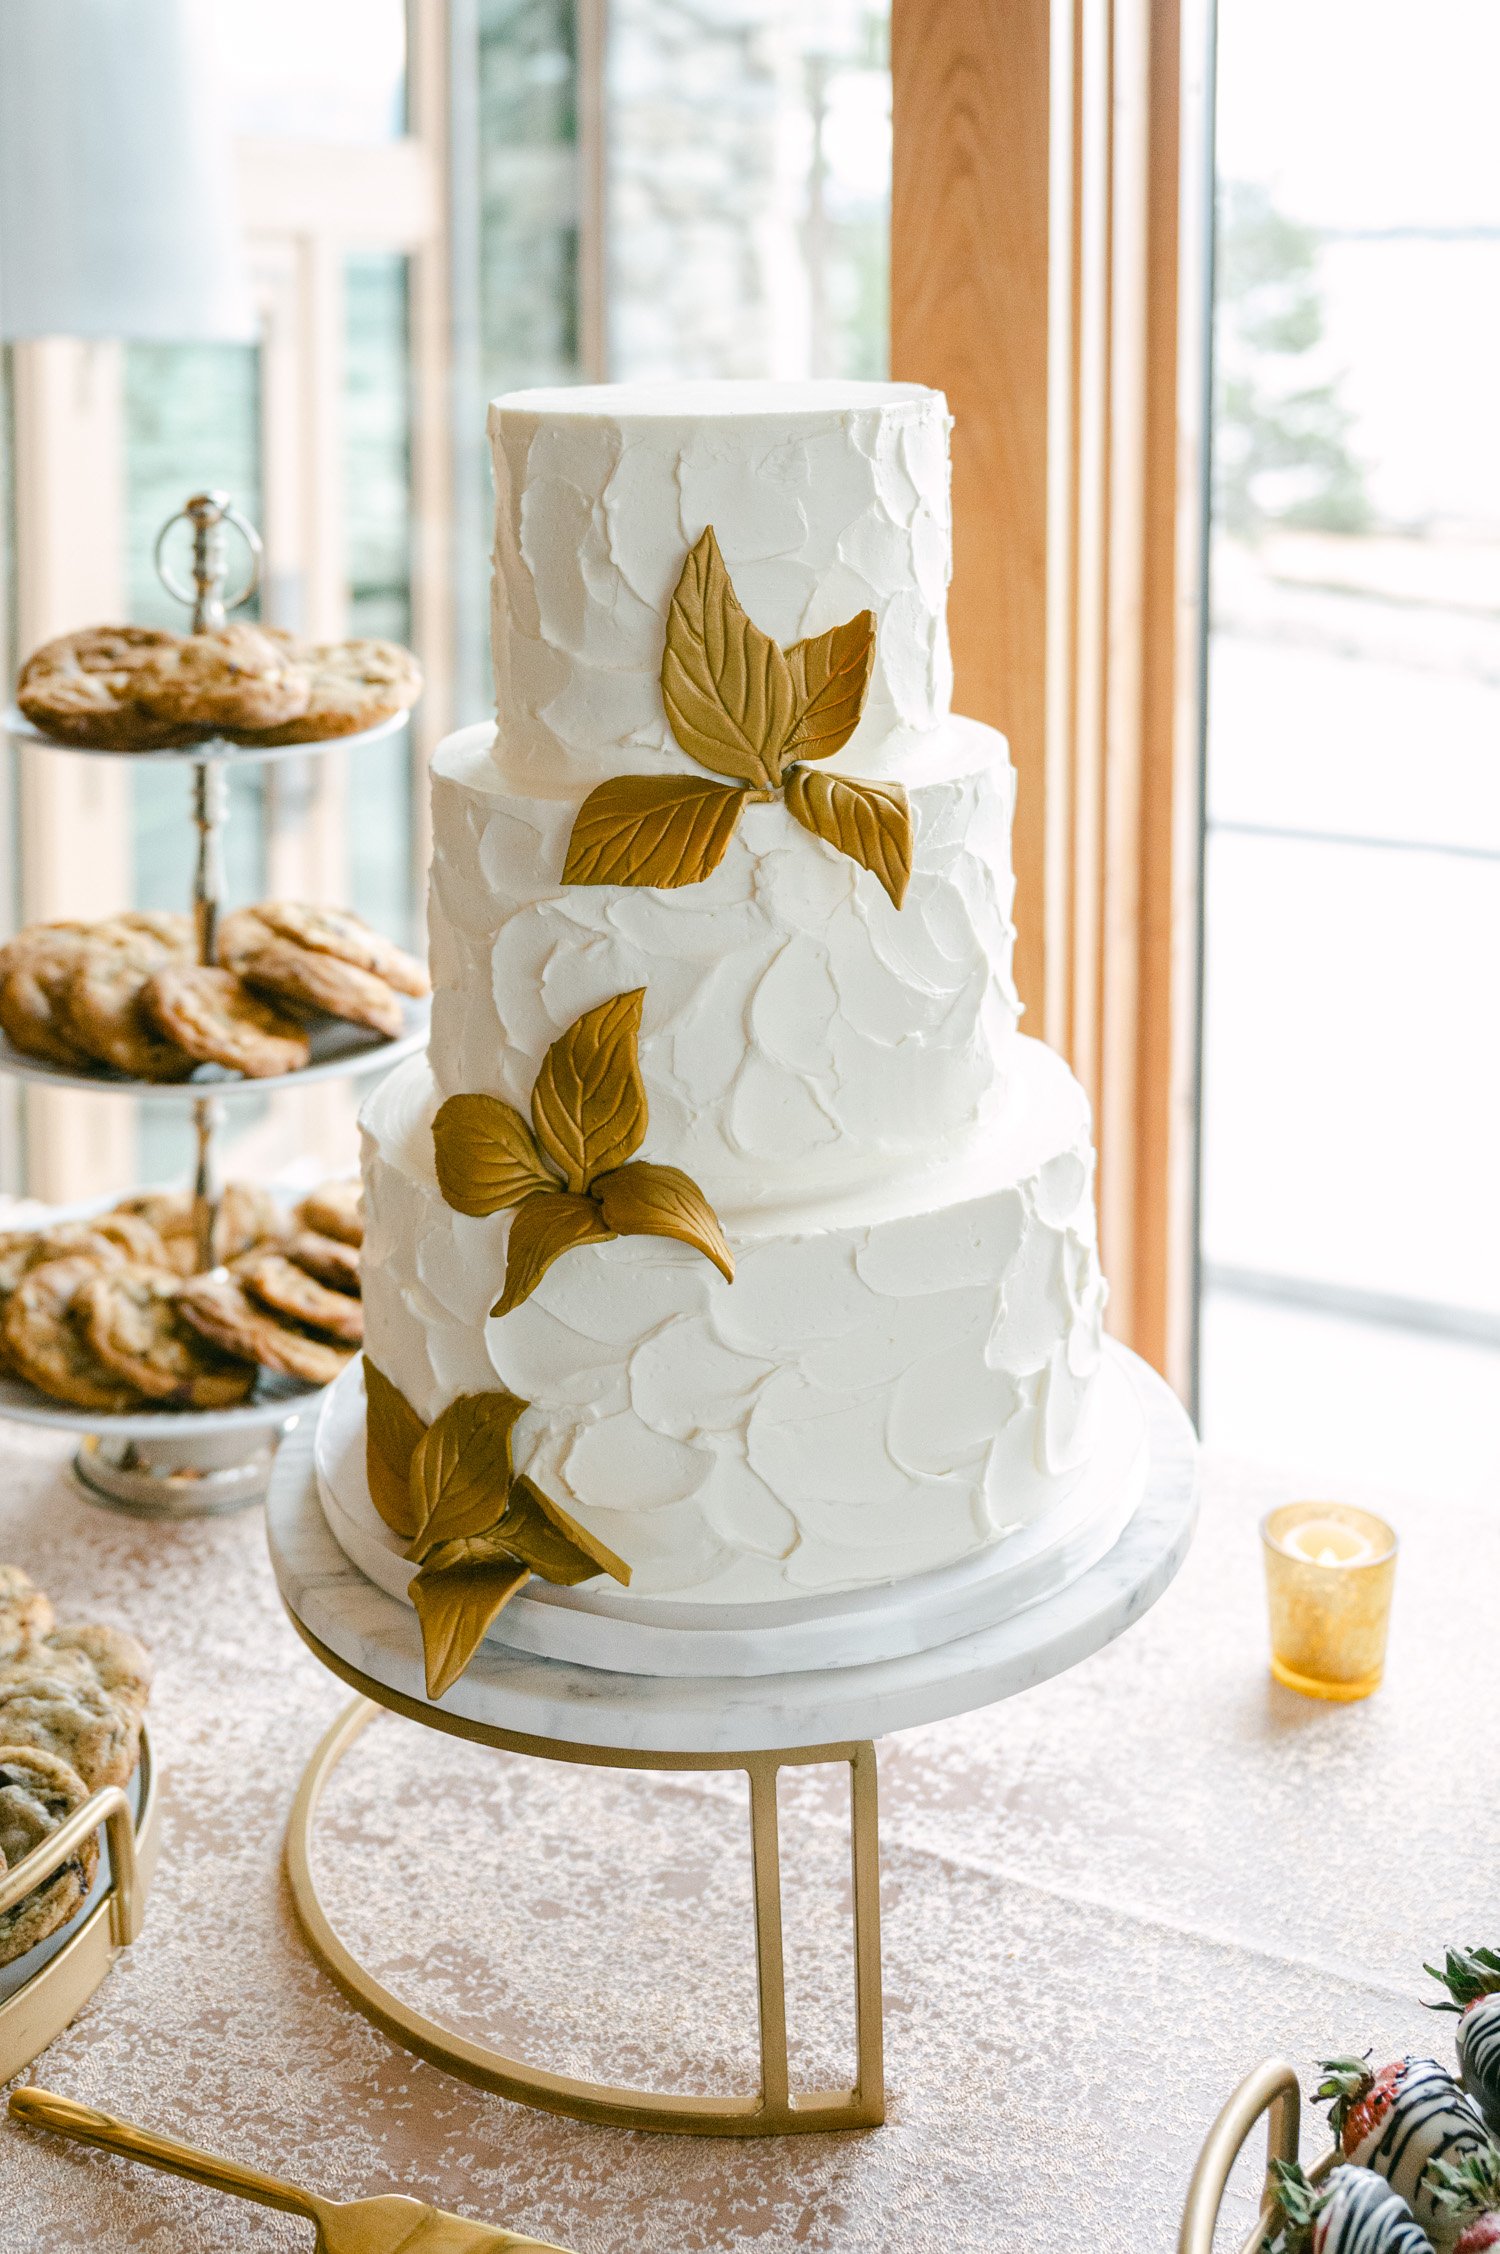 Edgewood Tahoe Wedding photos: photo of wedding cake with gold leave details